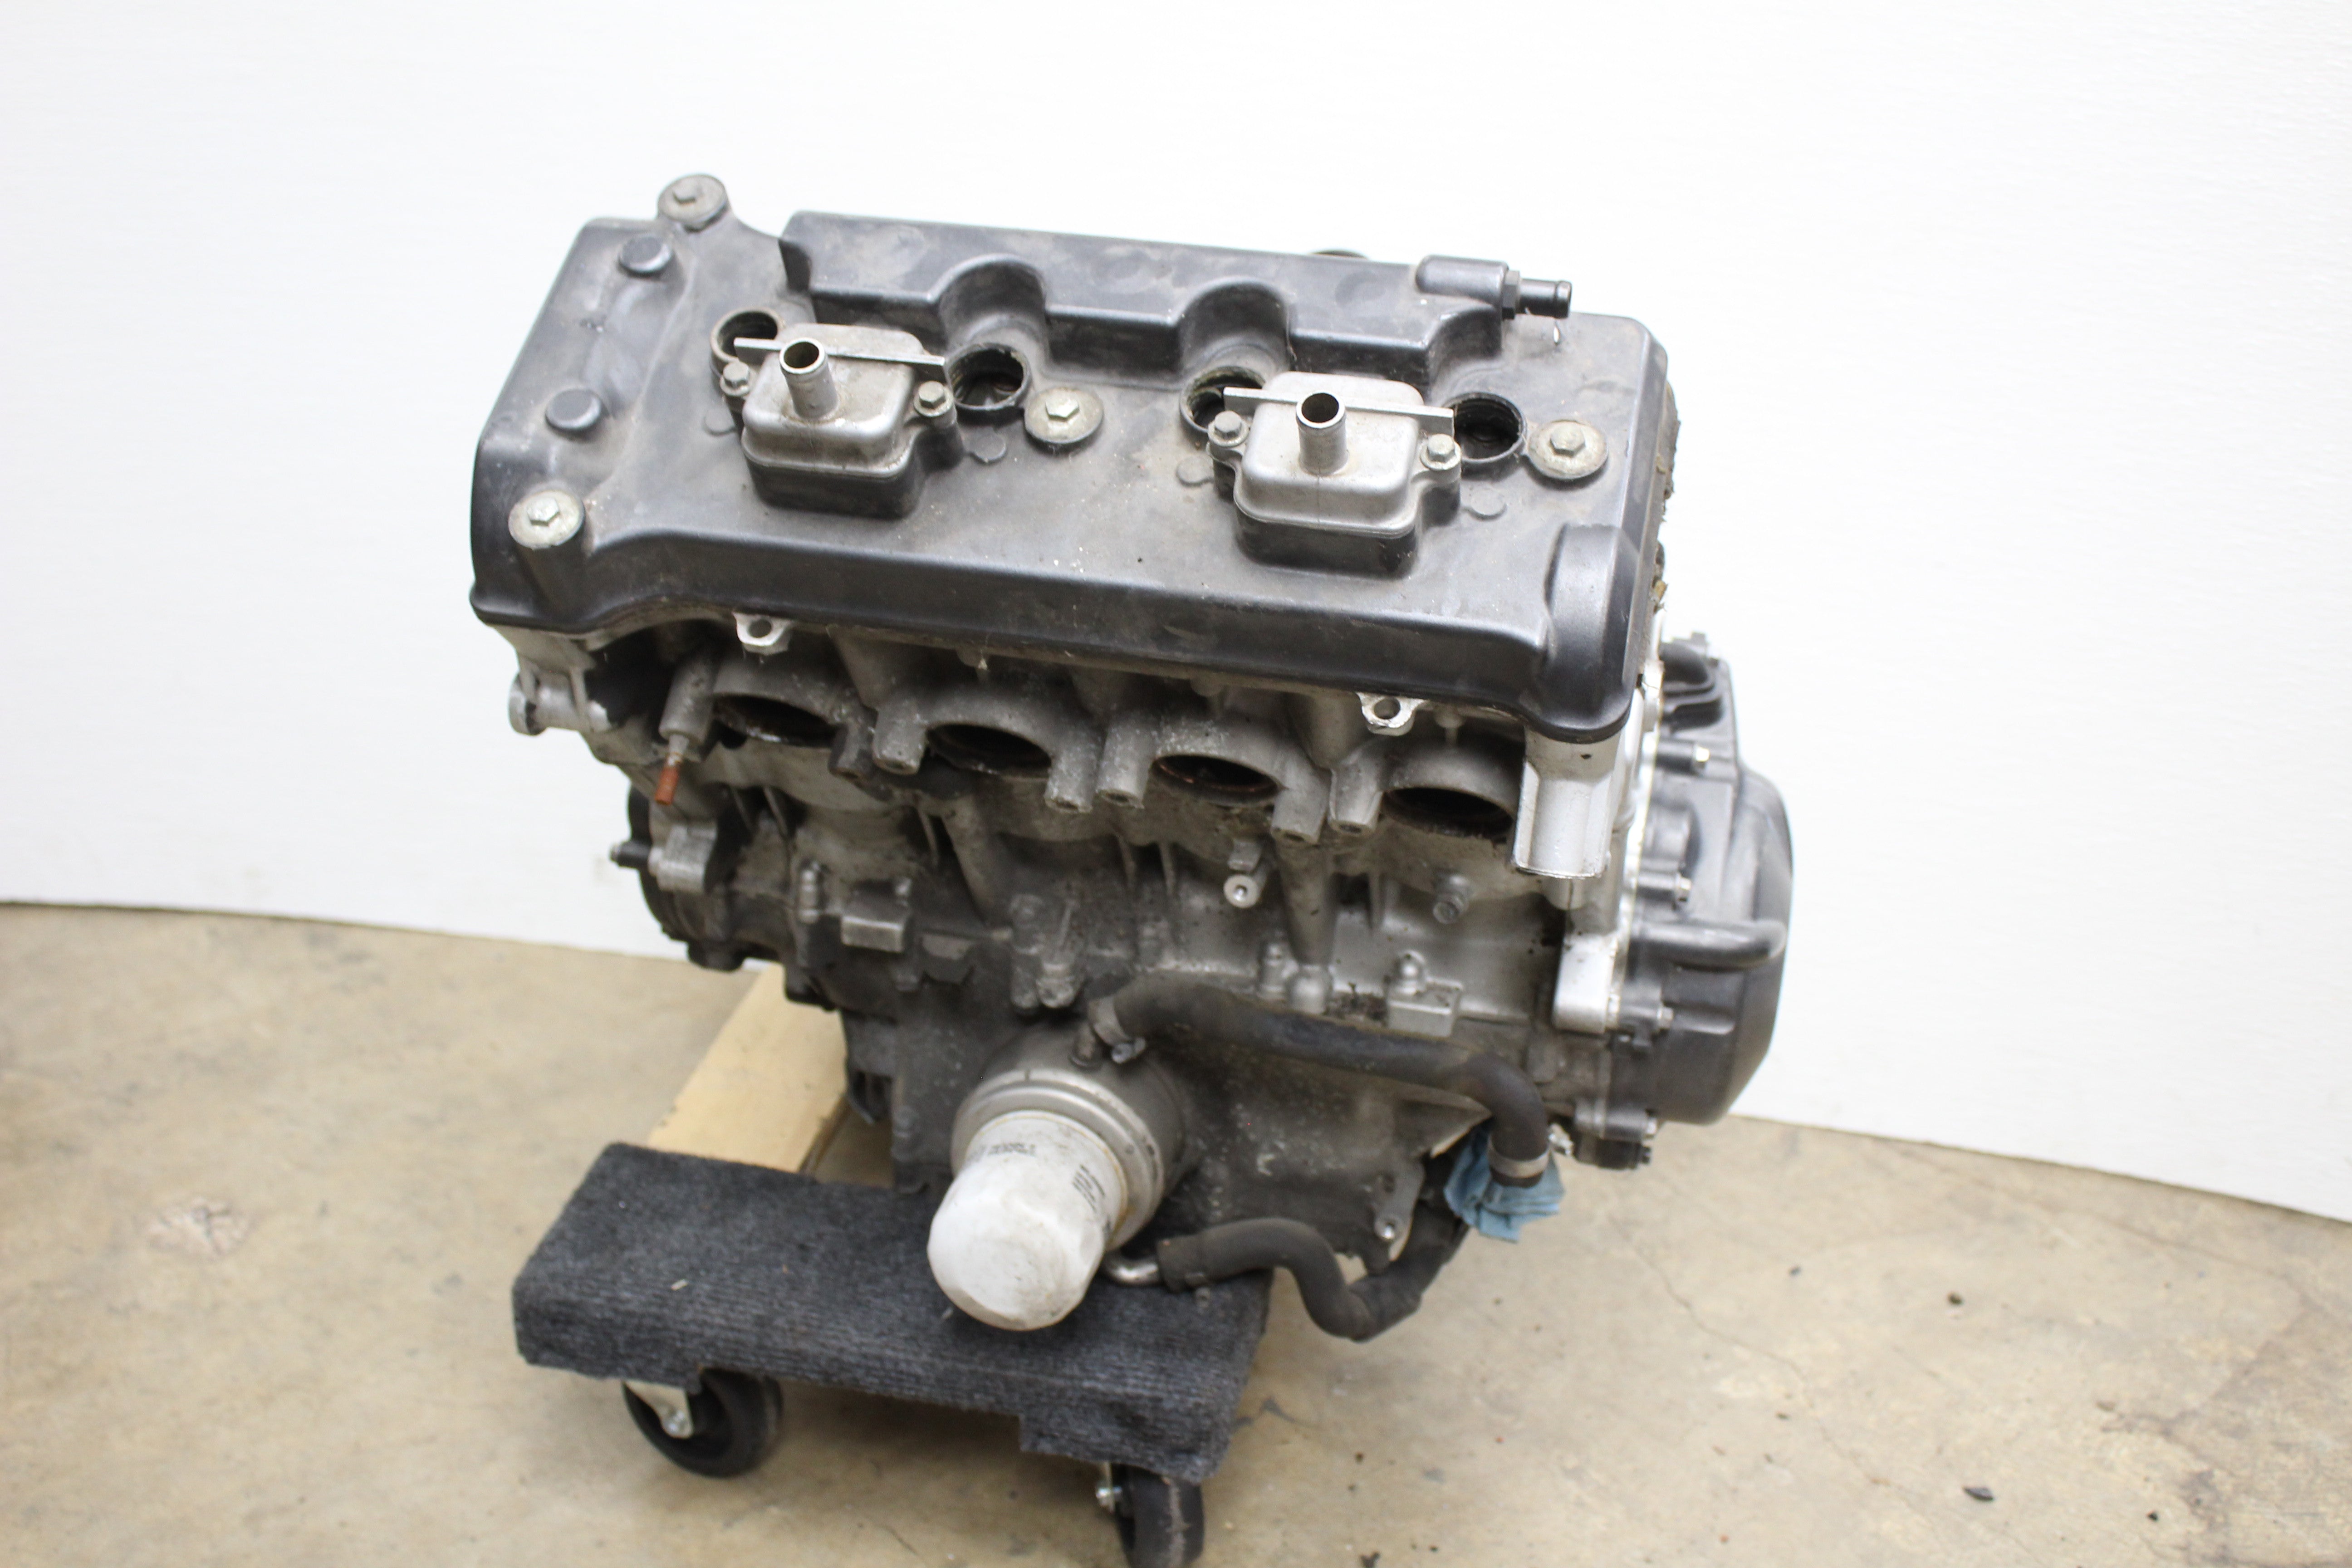 Honda OEM, Engine Motor Complete Honda CBR954RR 02-03 OEM